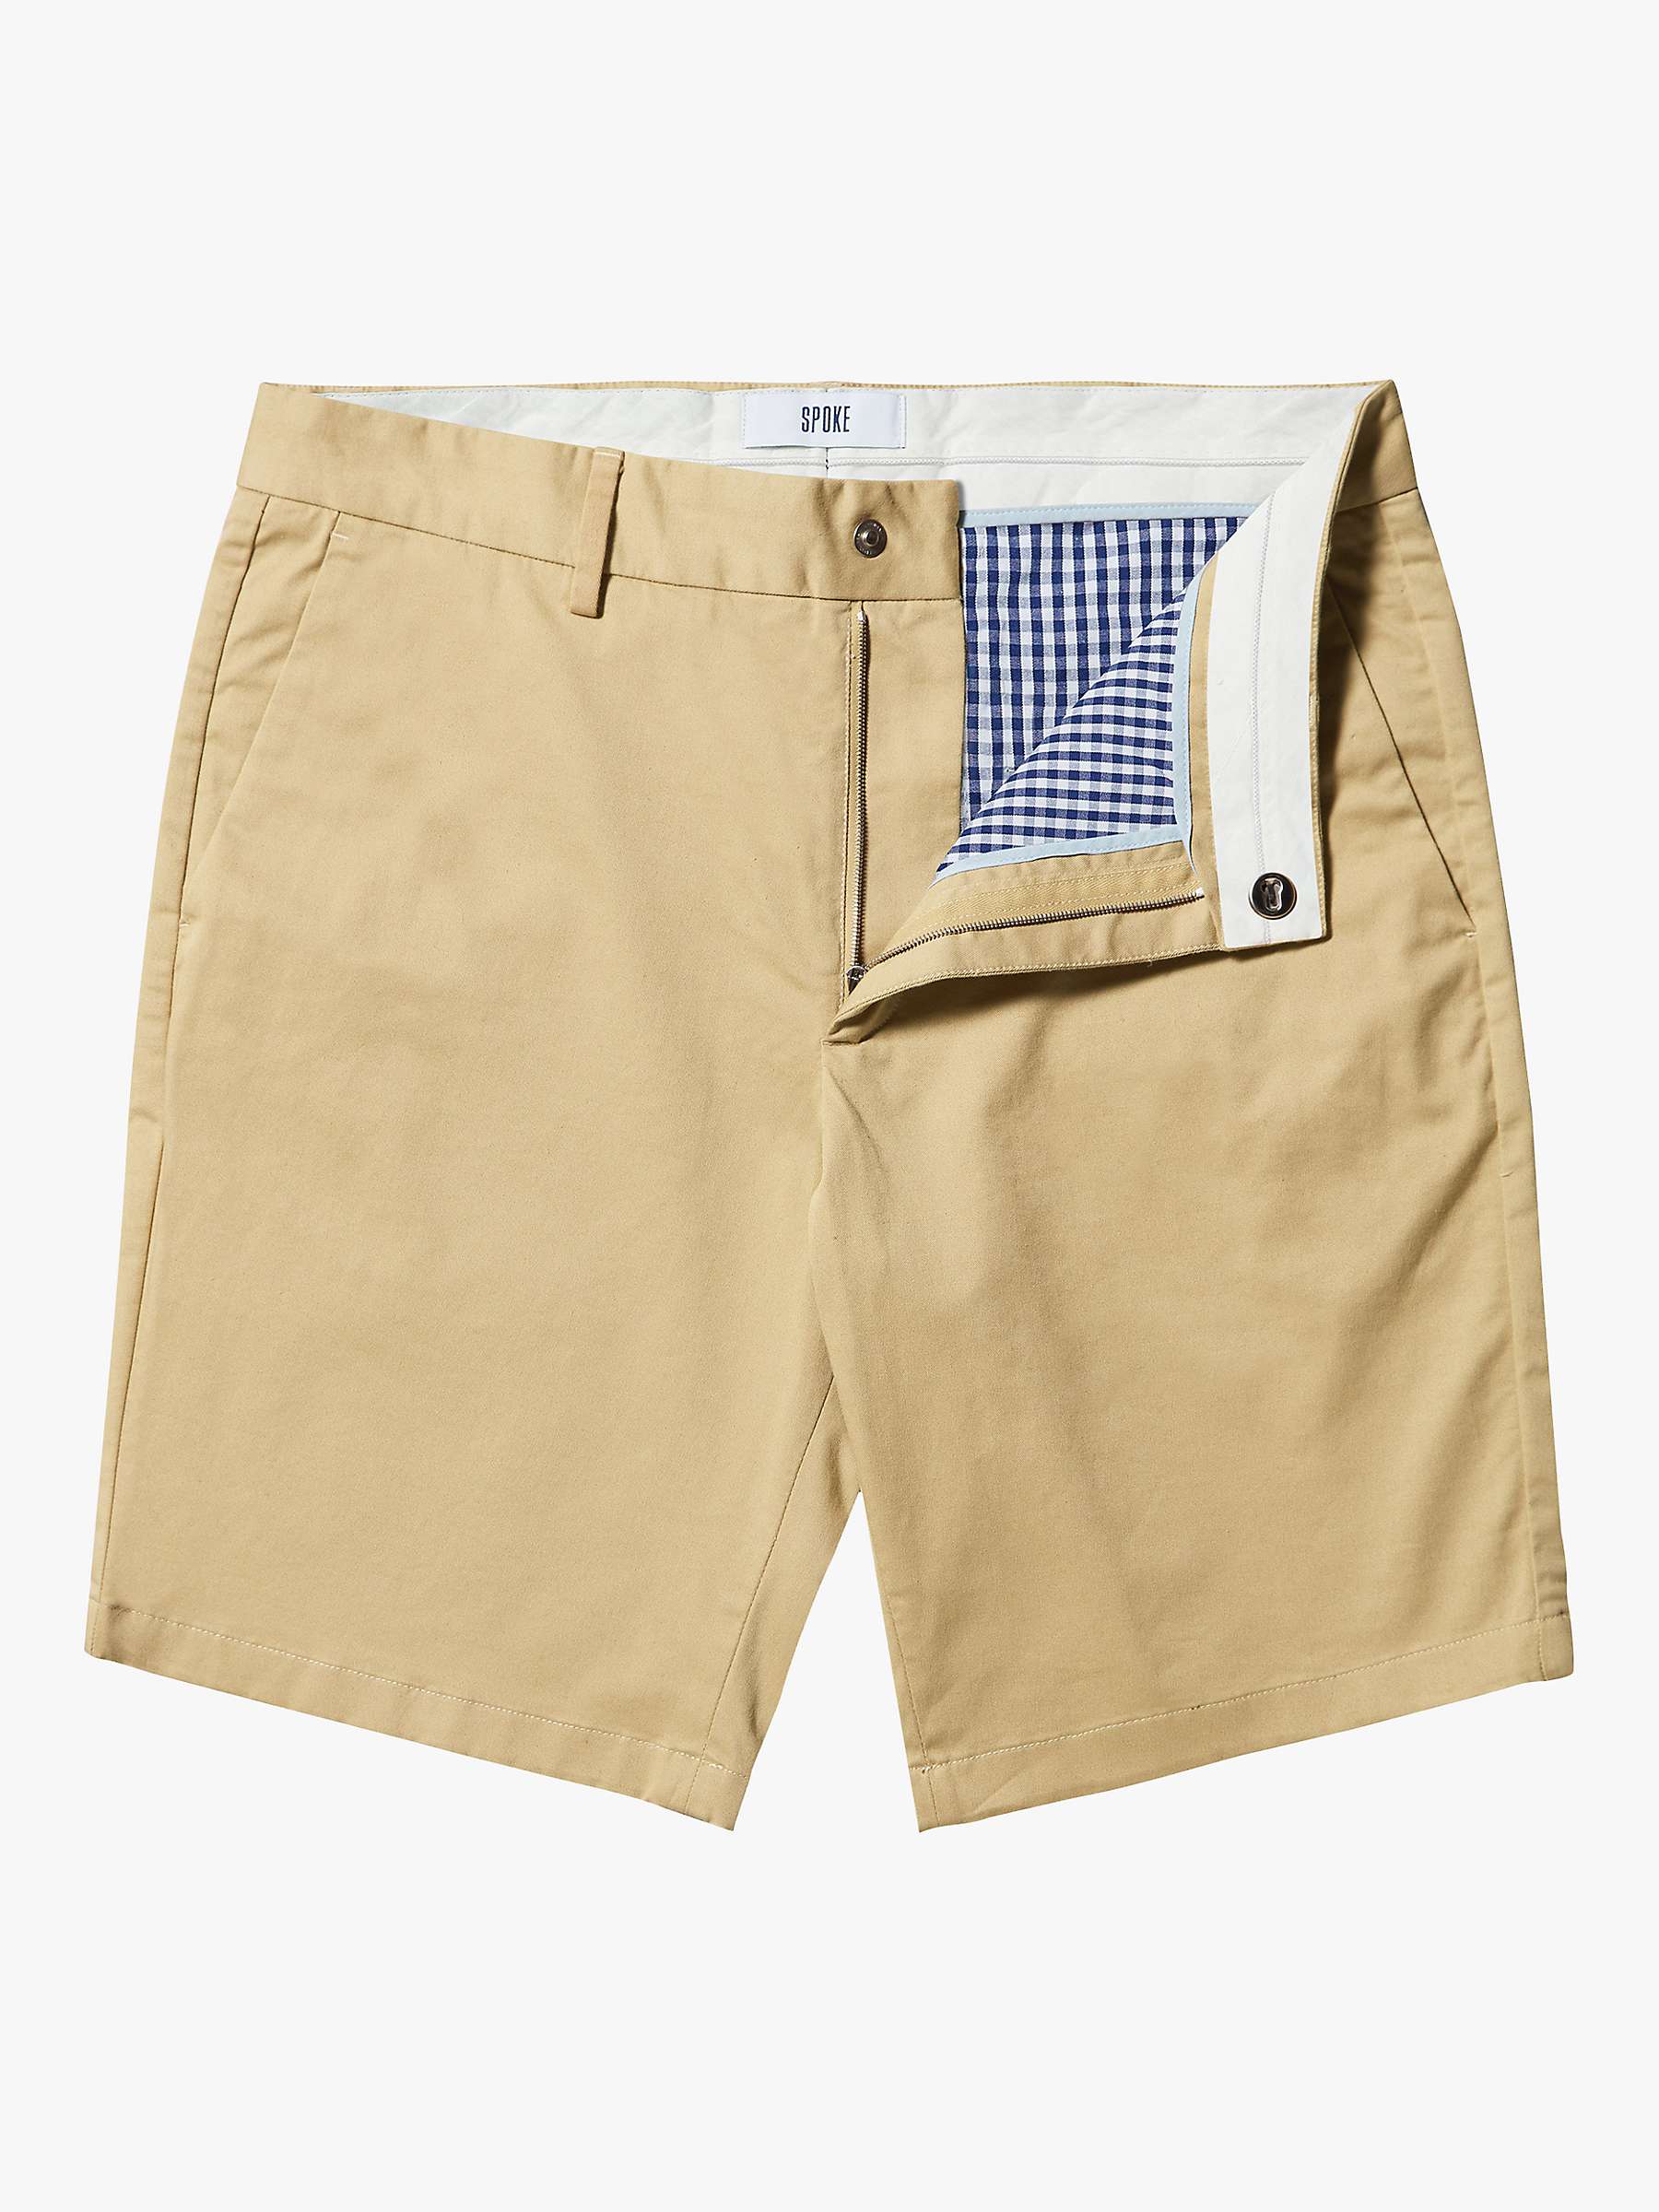 Buy SPOKE Sharps Cotton Blend Regular Thigh Shorts Online at johnlewis.com